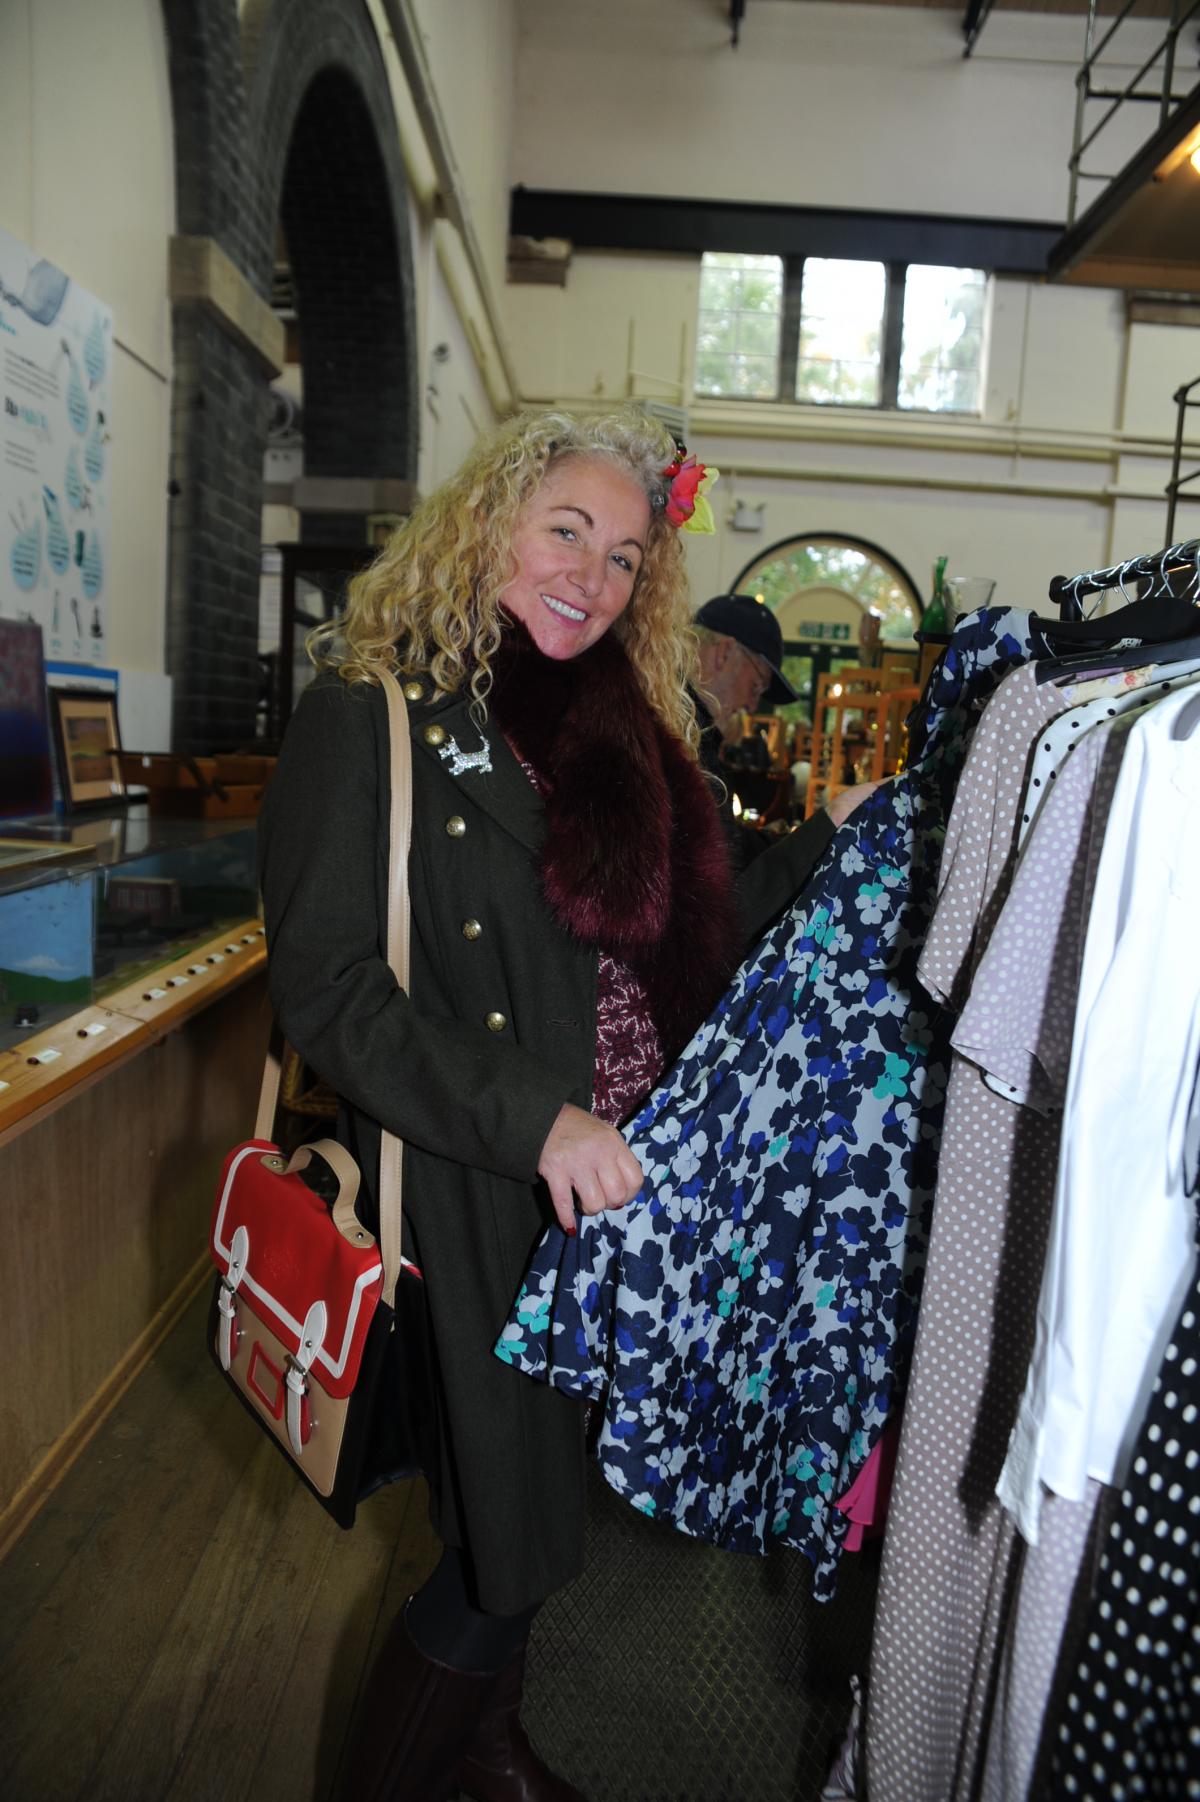 BROWSING: Lindsey Barrell looking at vintage clothing.